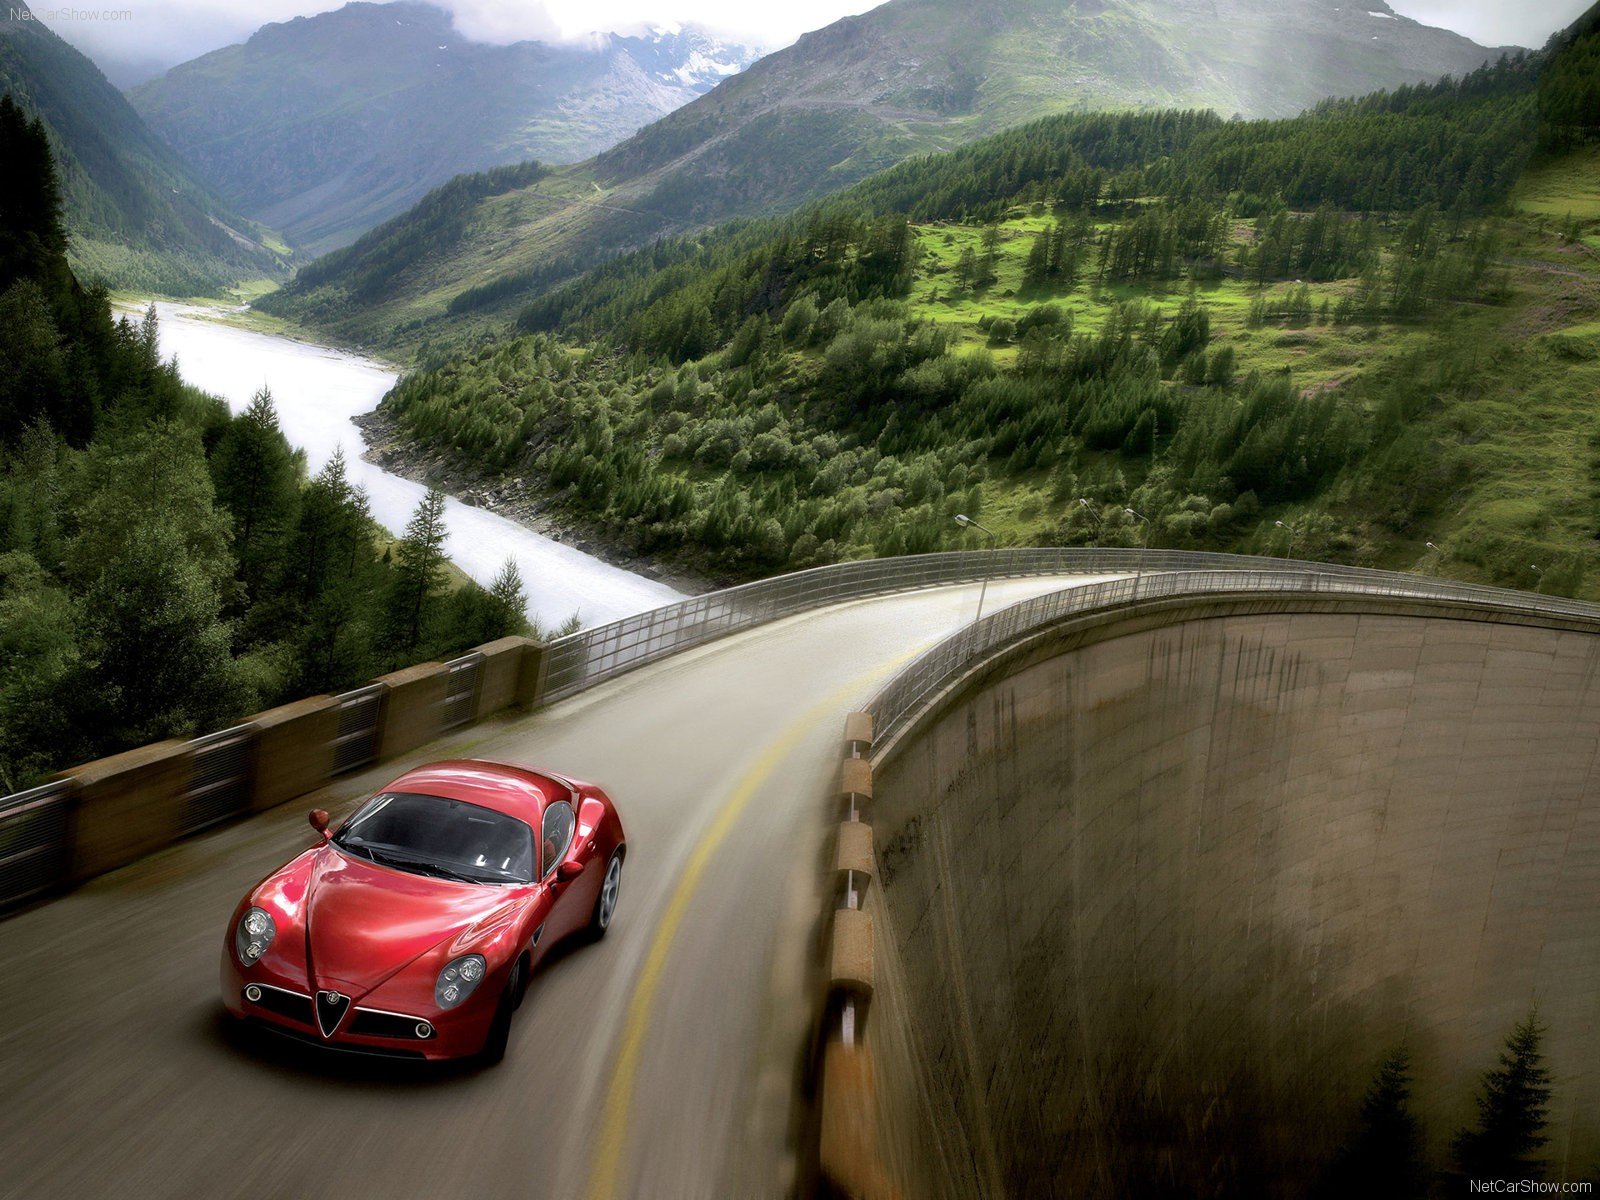 Едет красная машинка. Alfa Romeo 8c. Машина на дороге. Машина в горах. Красивая машина на дороге.